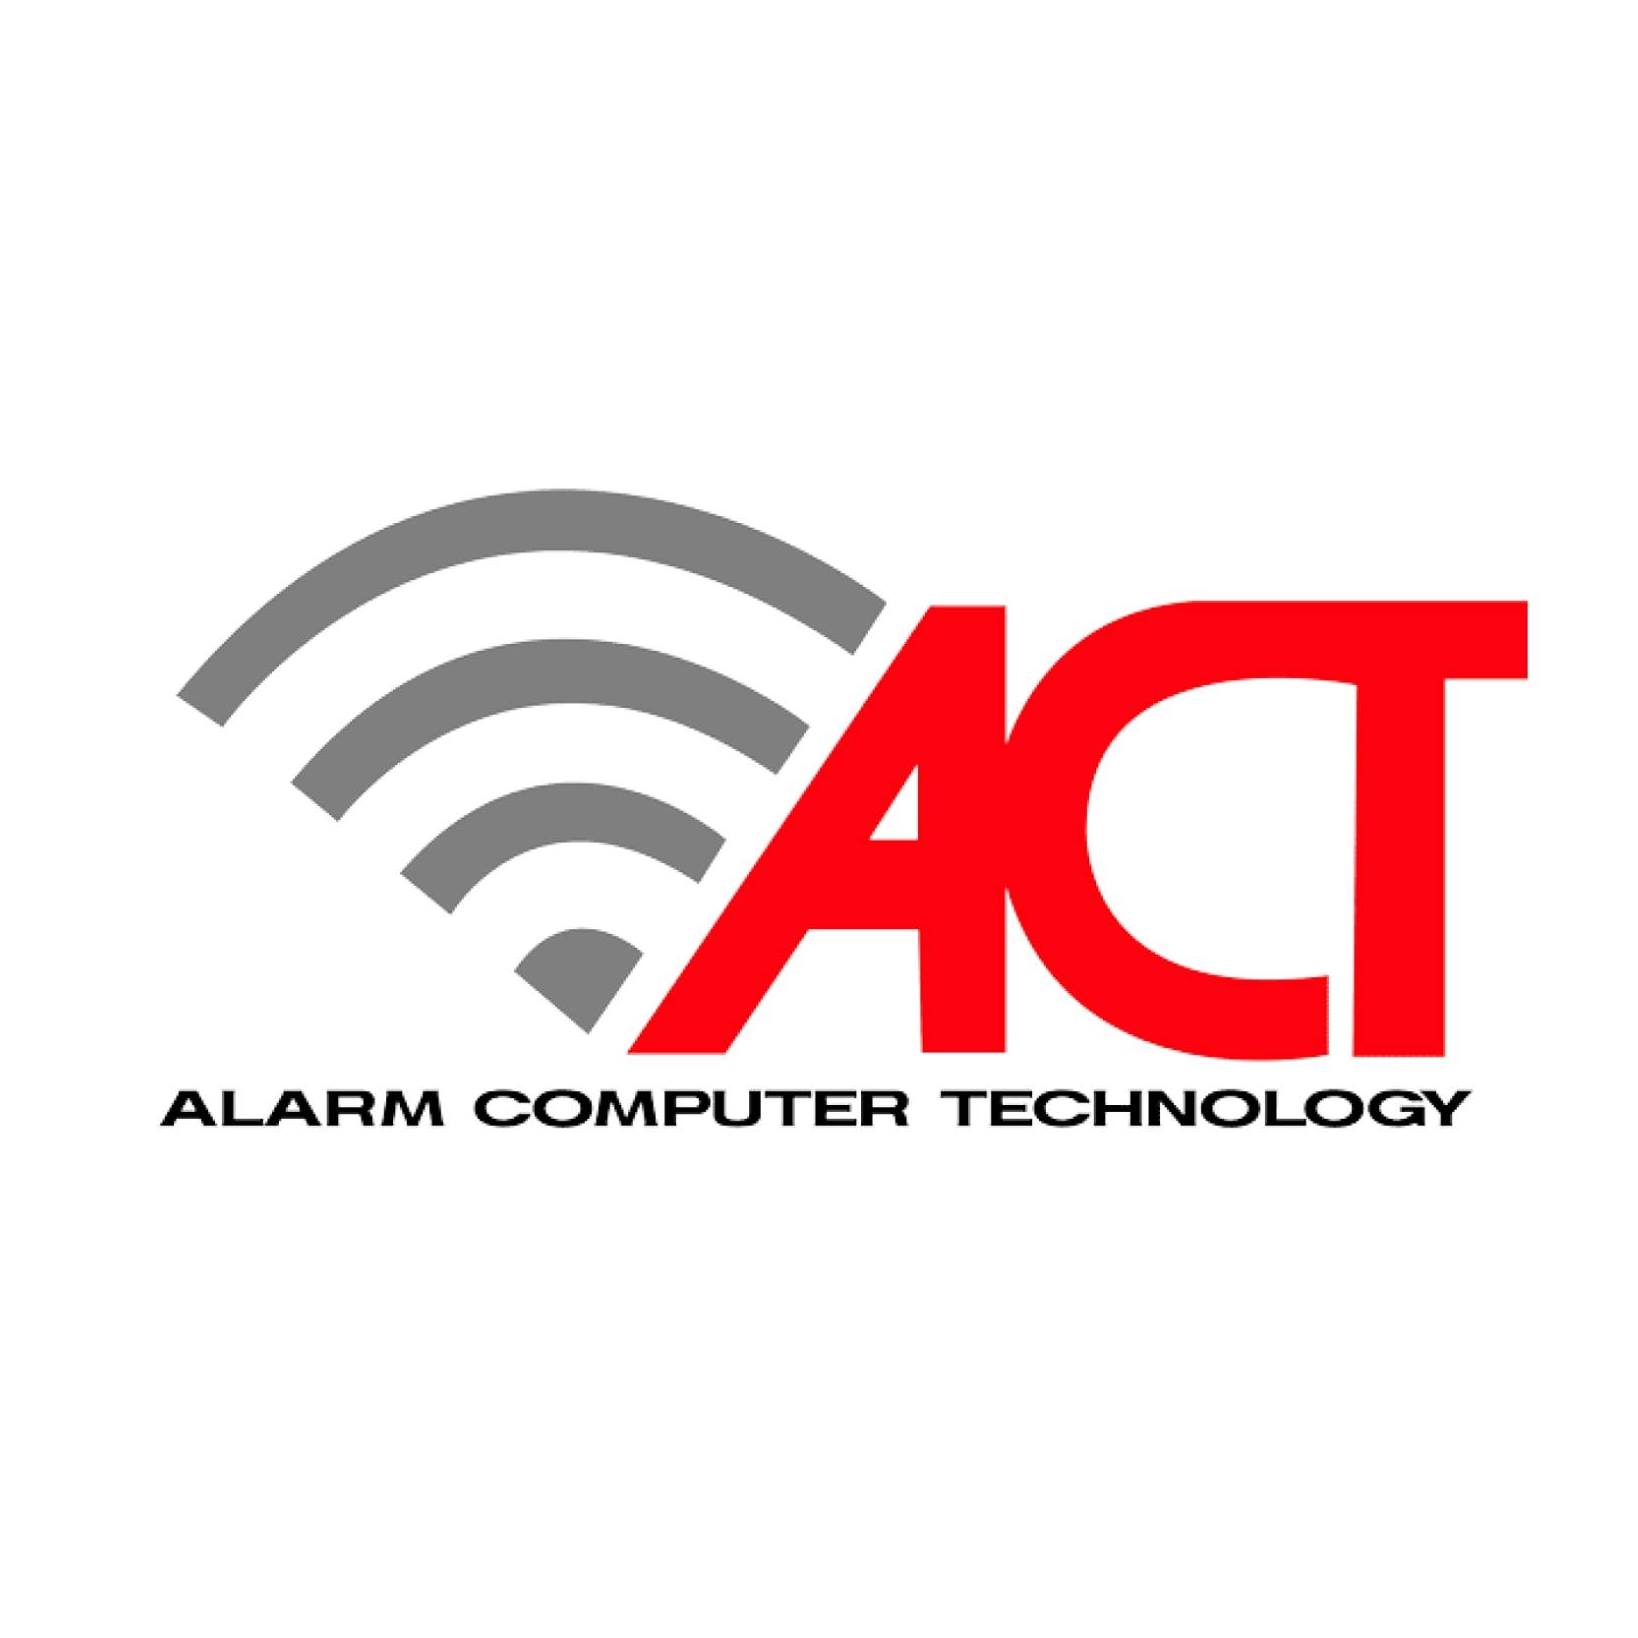 Alarm Computer Technology